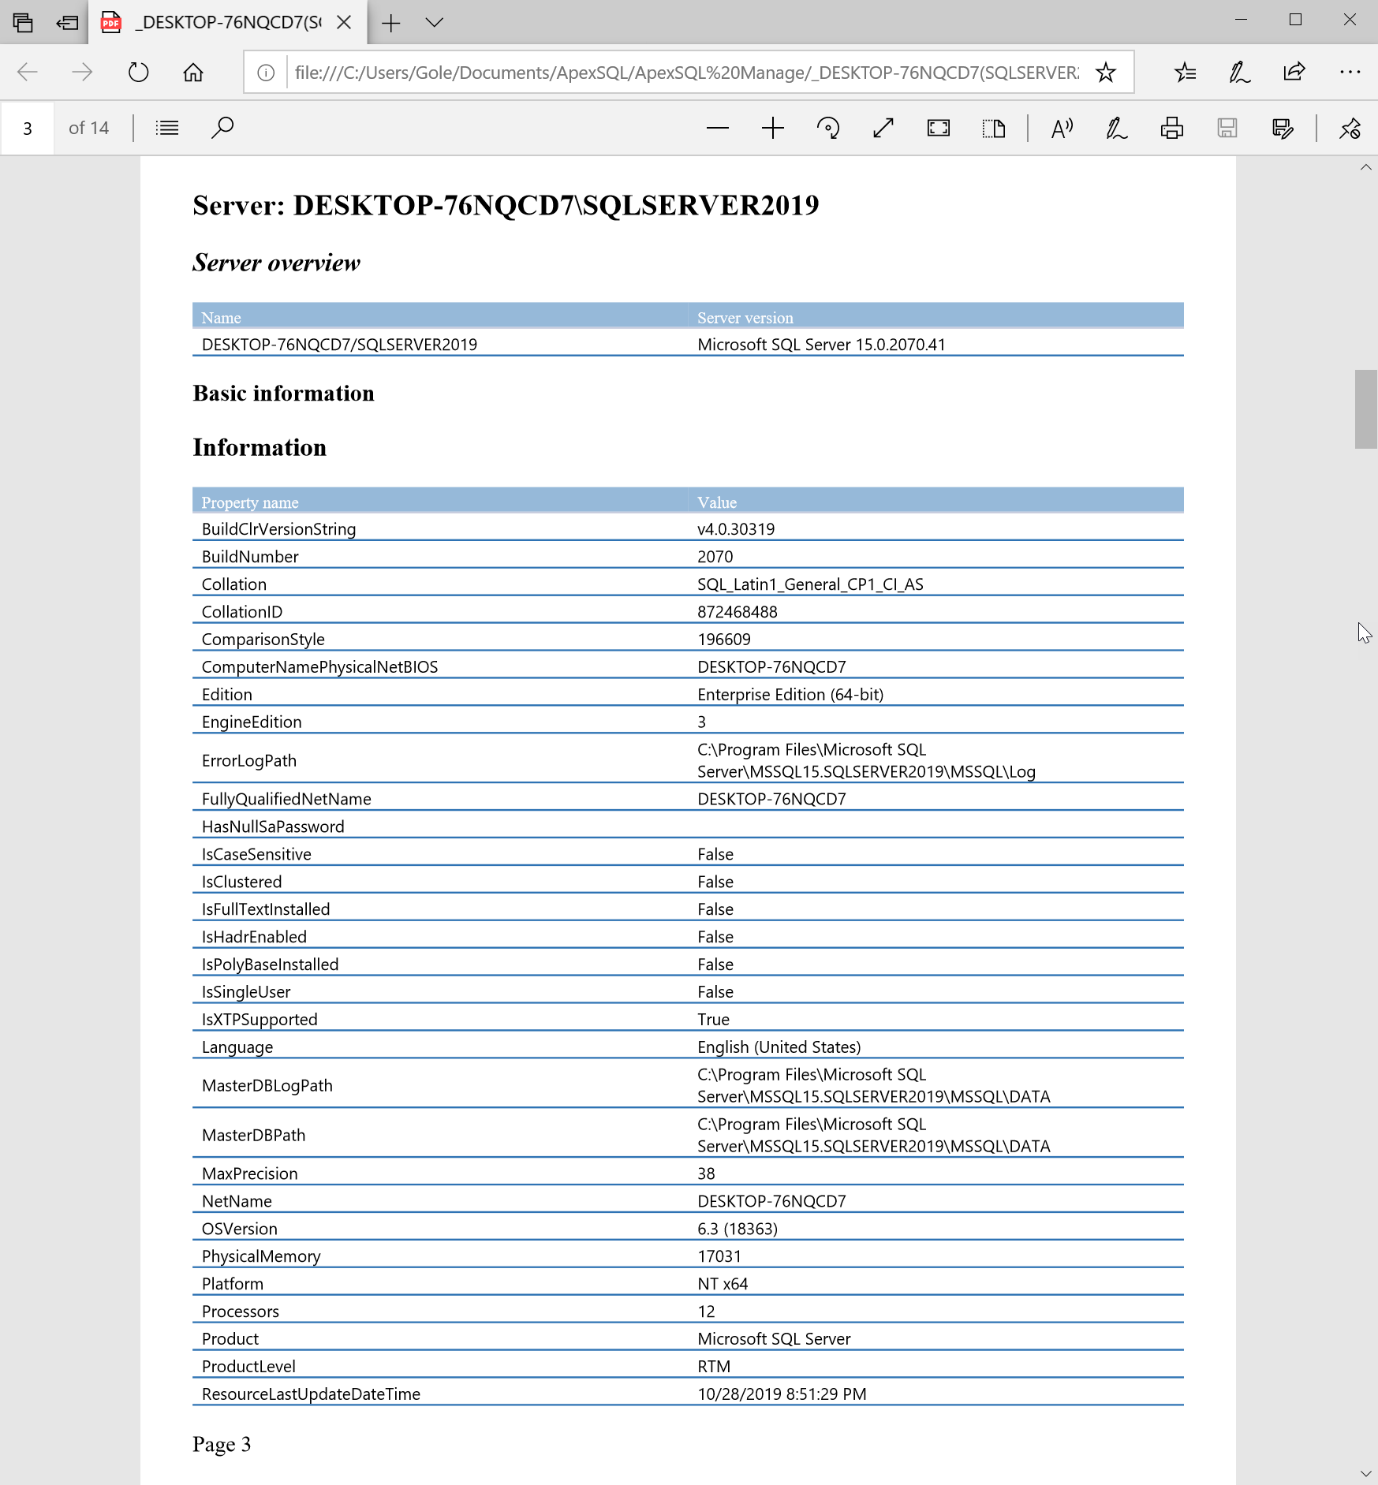 Generated documentation for SQL Server in pdf file format